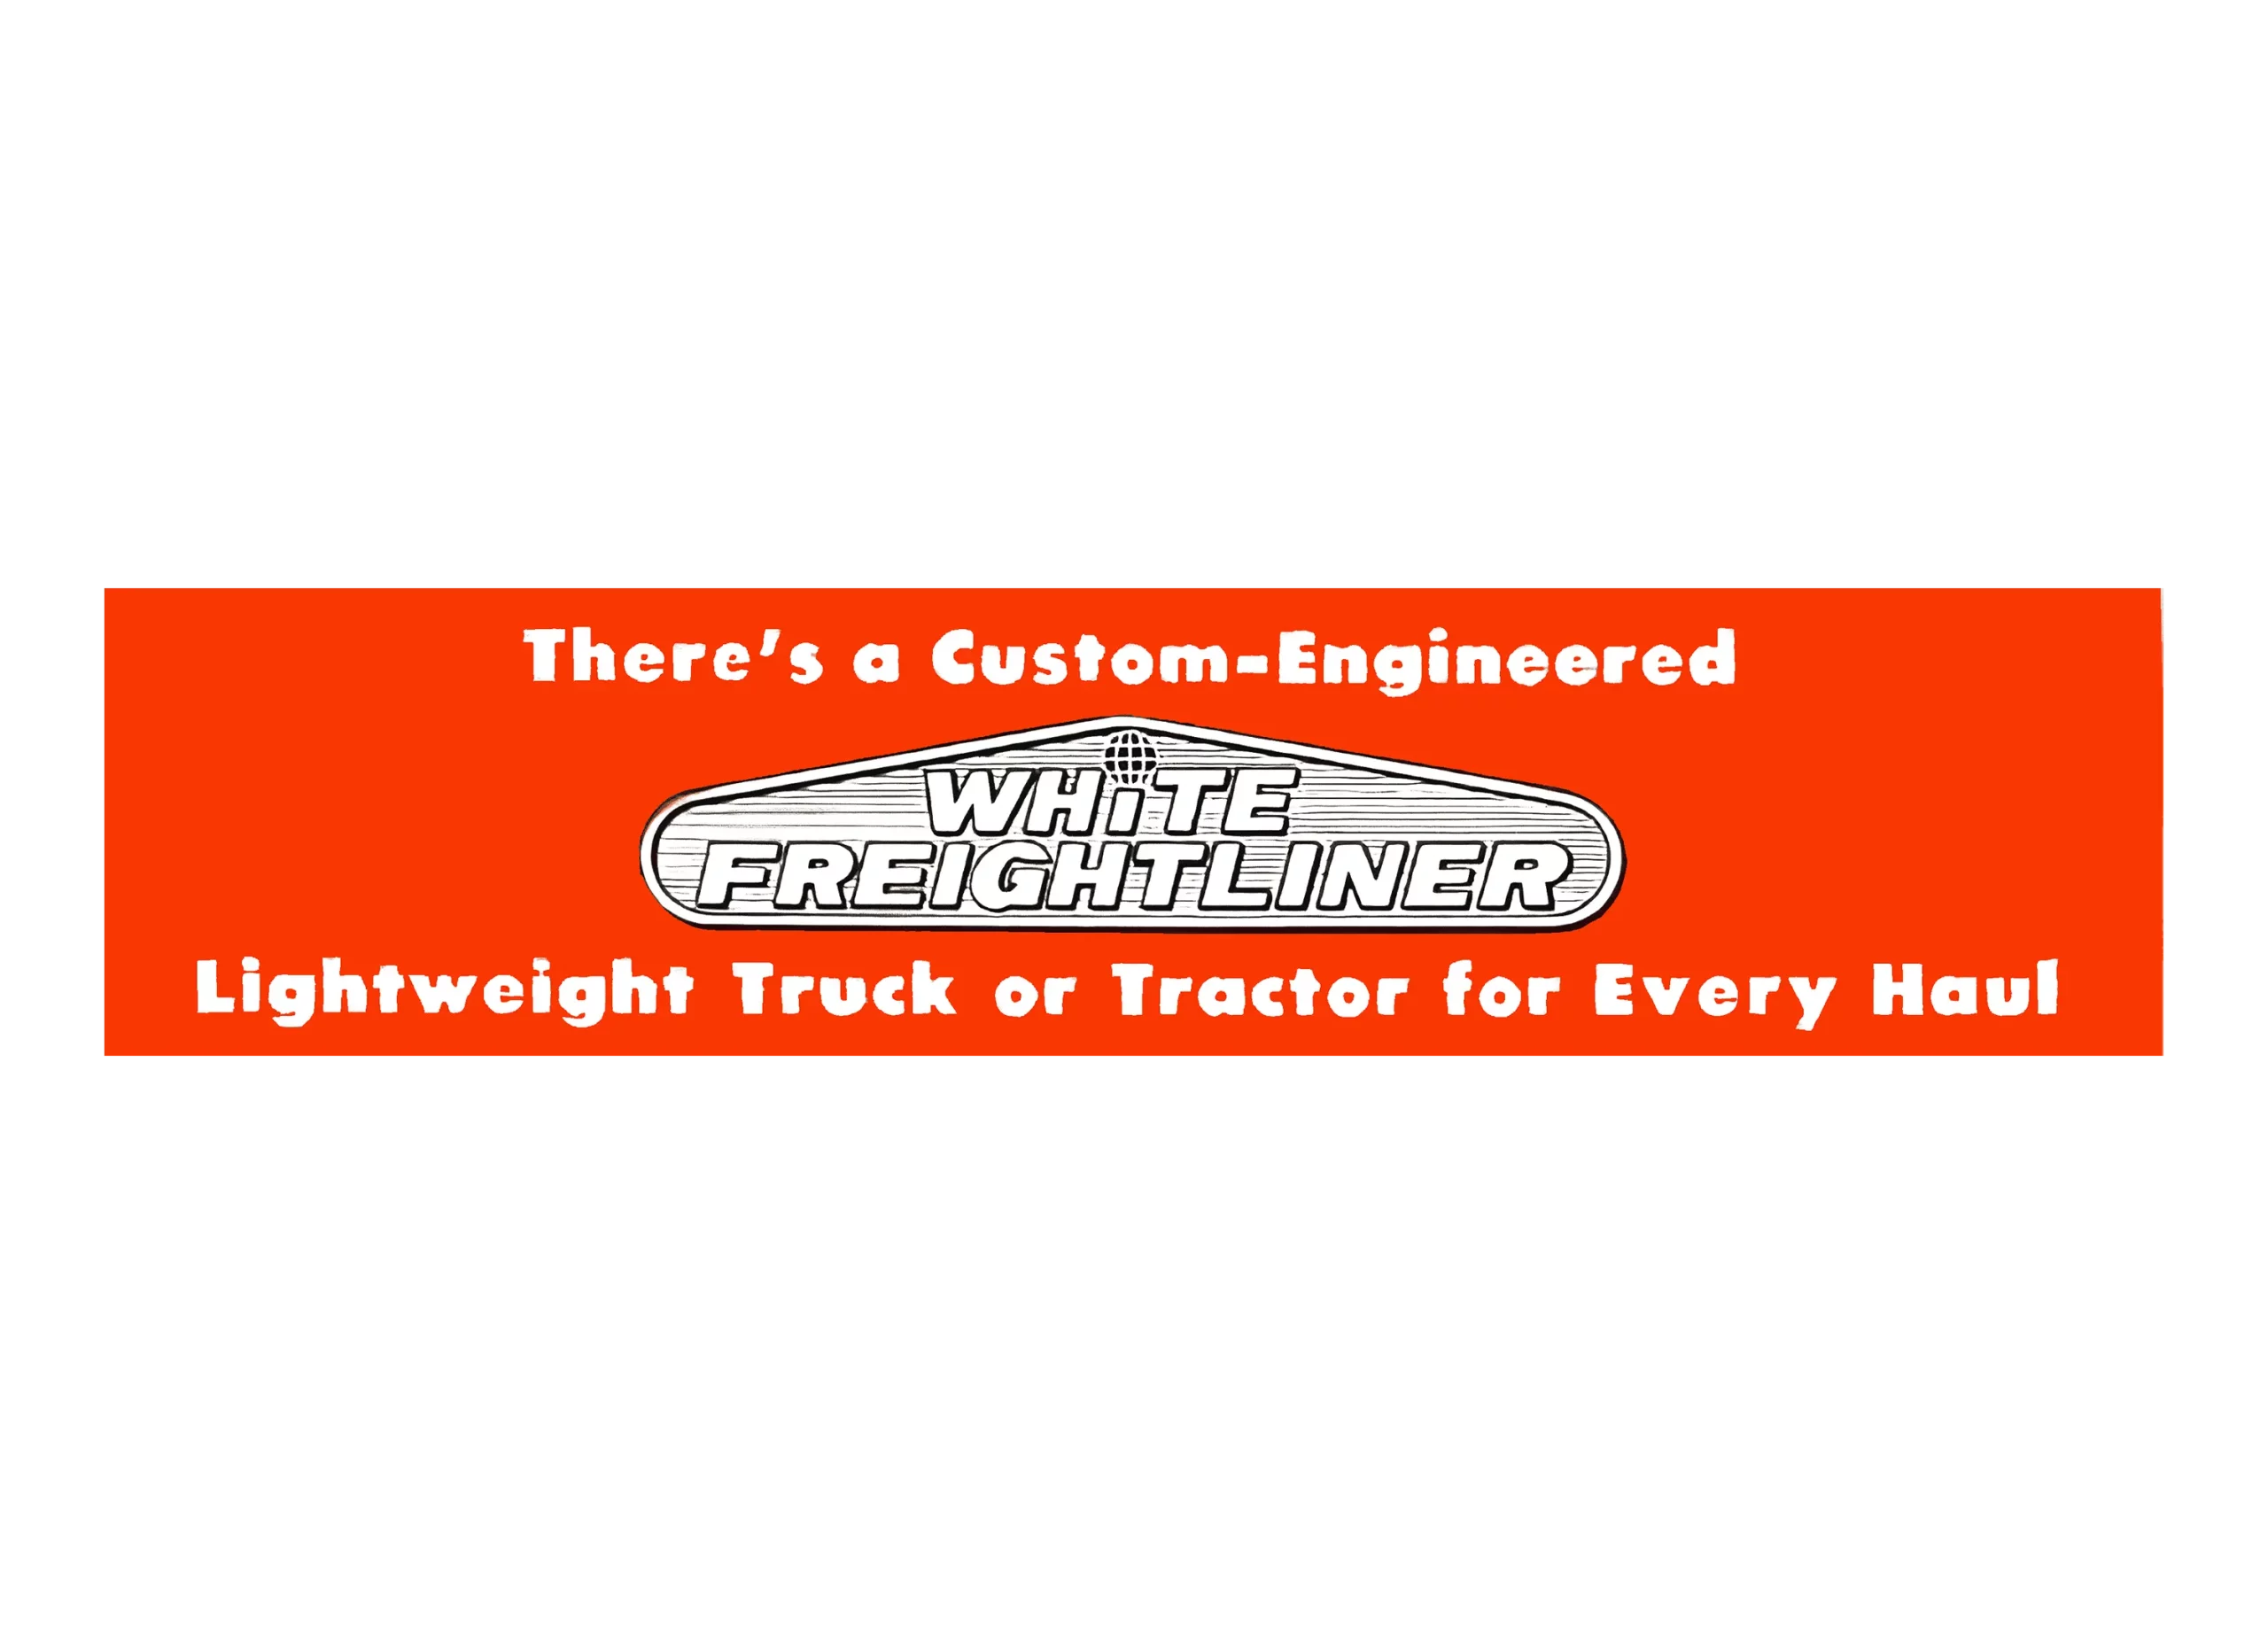 Freightliner logo 1955-1962